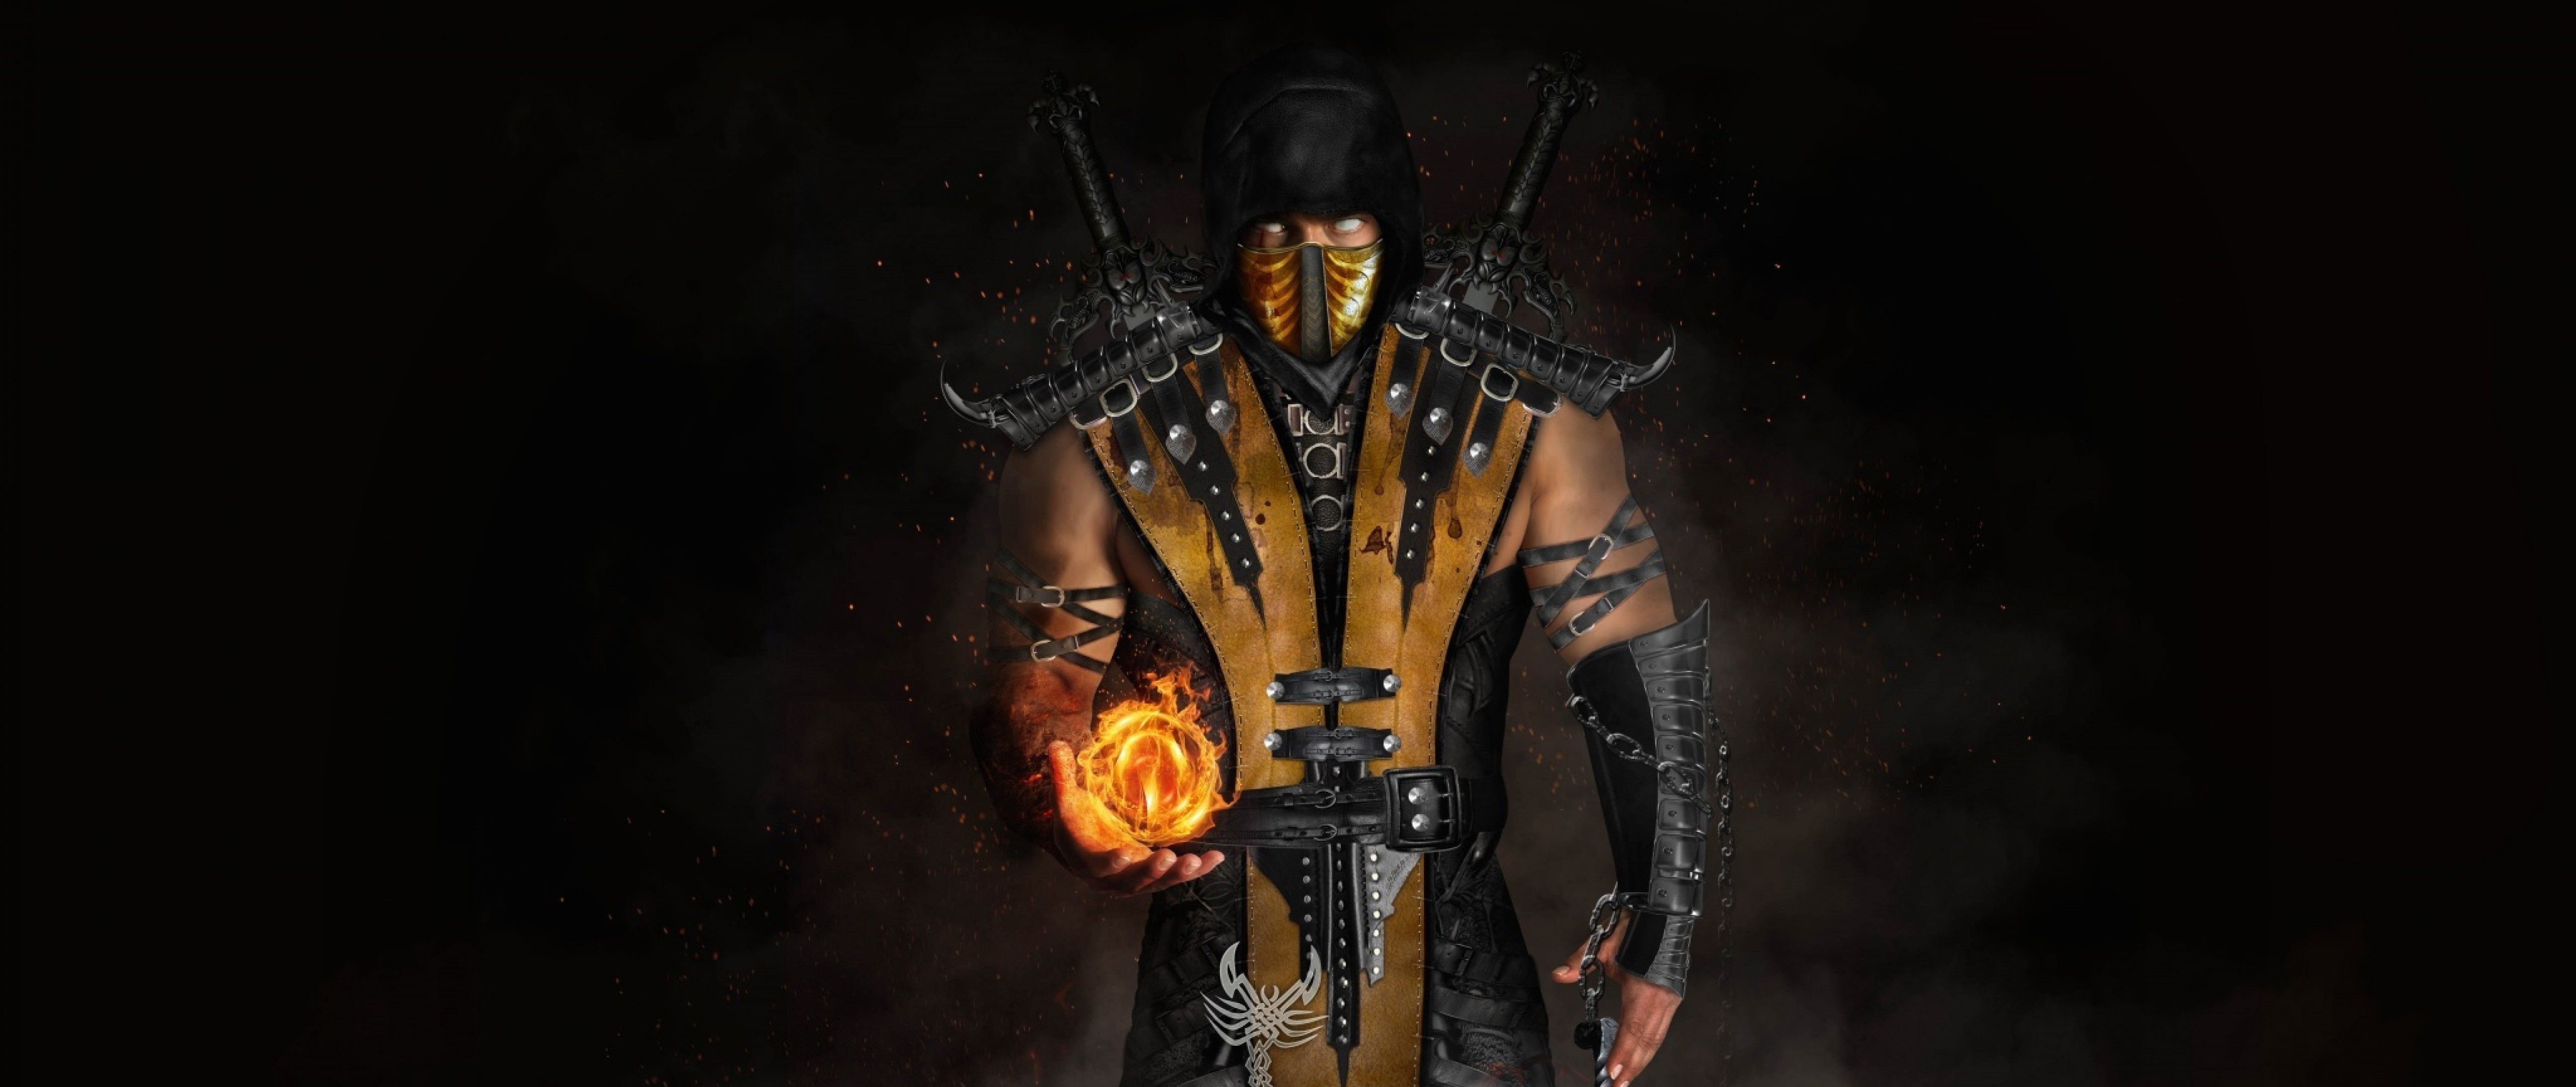 Scorpion Cool Mortal Kombat X Hd Wallpapers for Desktop and Mobiles